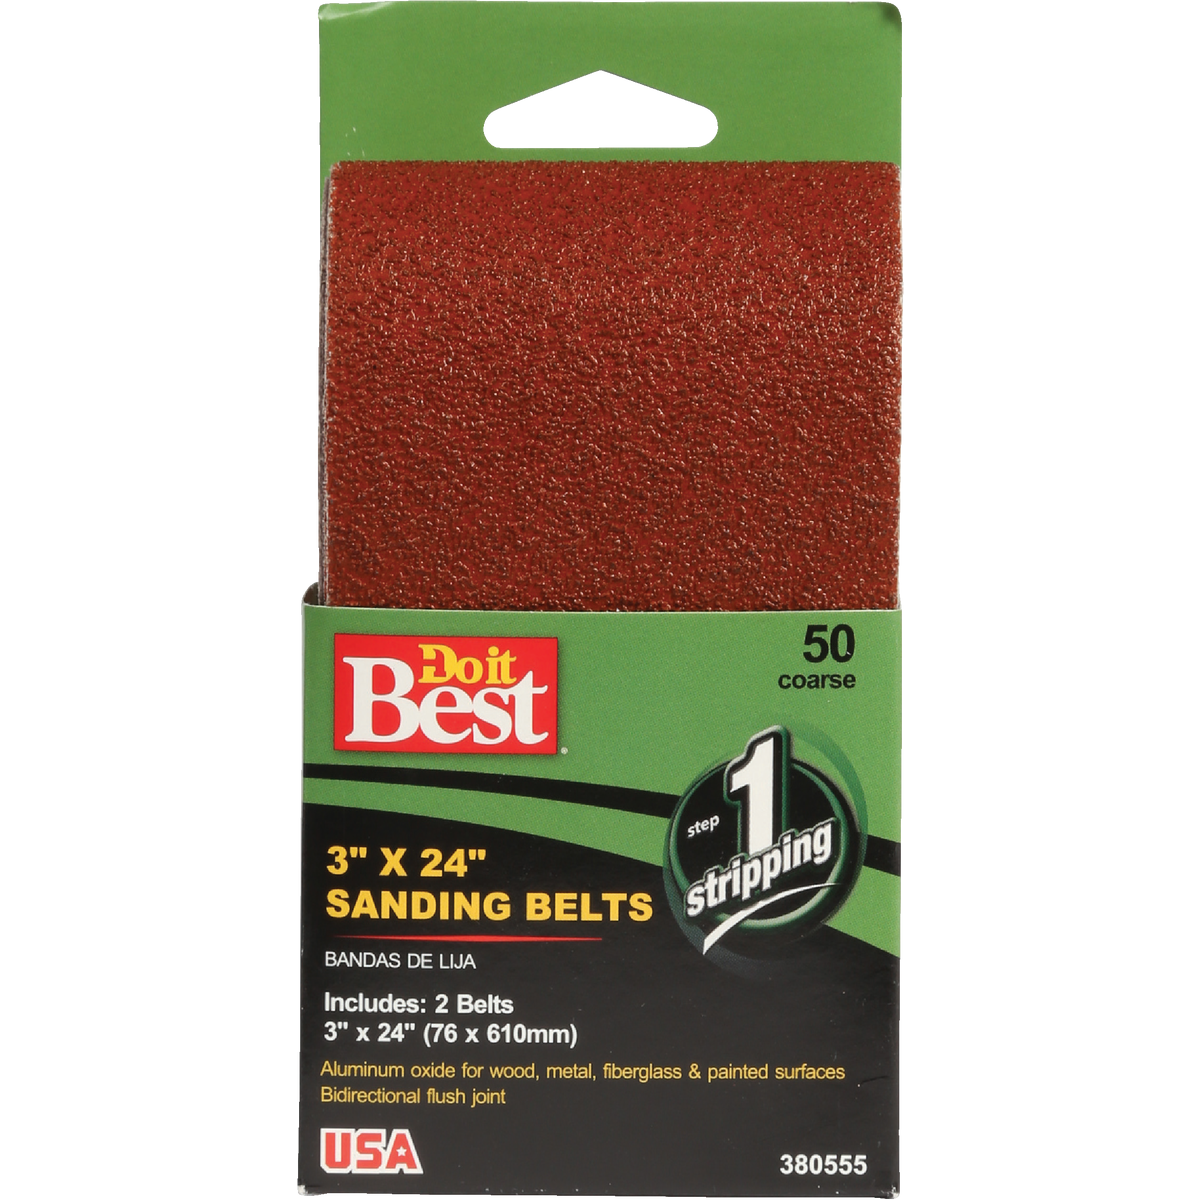 Sanding Belts & Cleaner